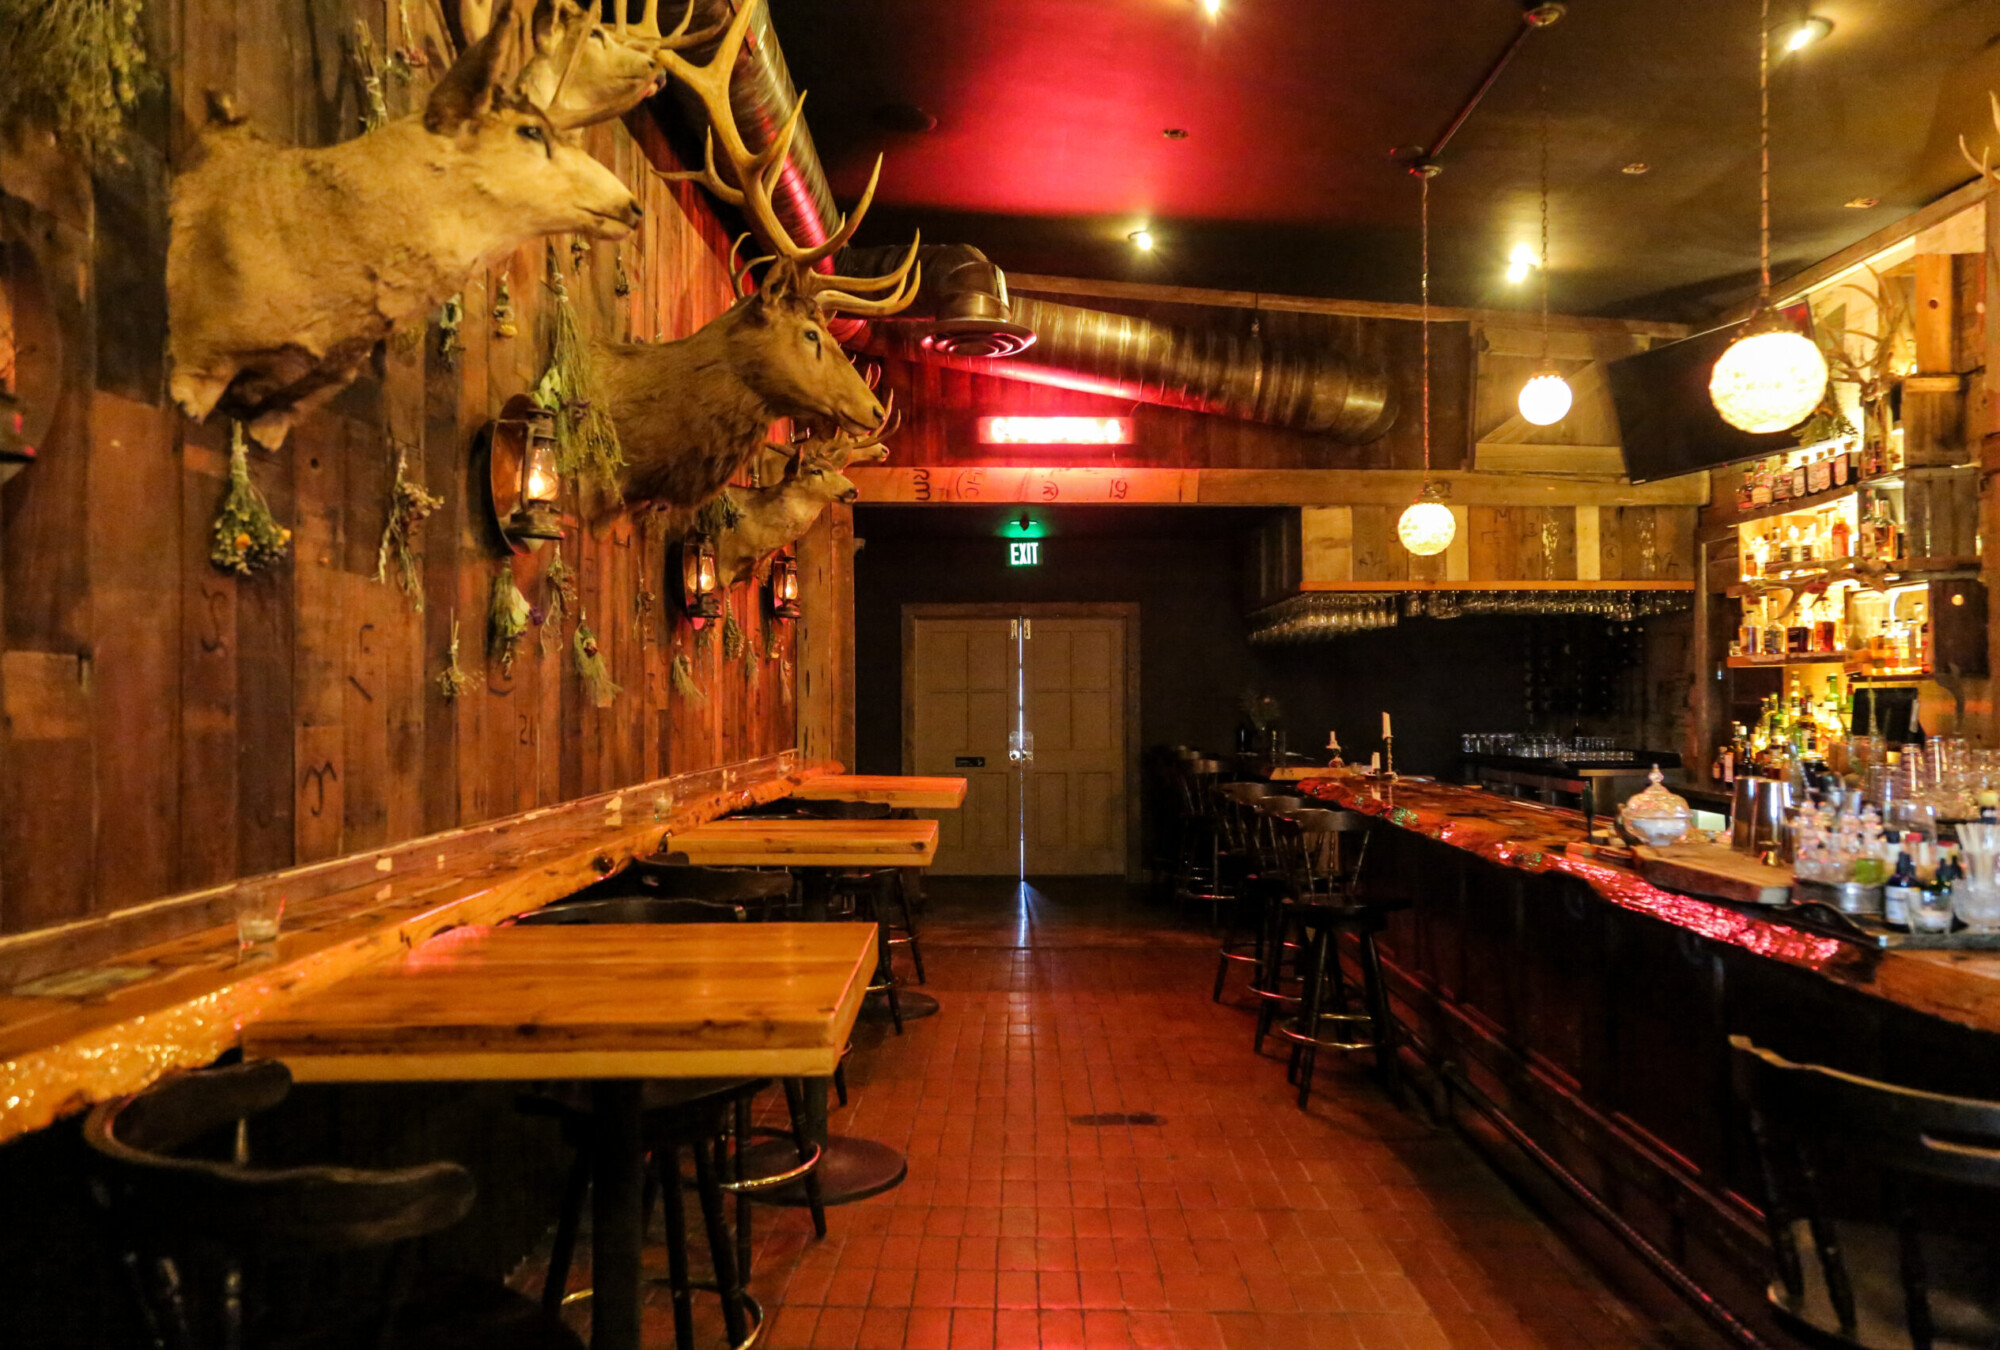 Dimly lit interior of the Cuyama Buckhorn Bar in New Cuyama, California.